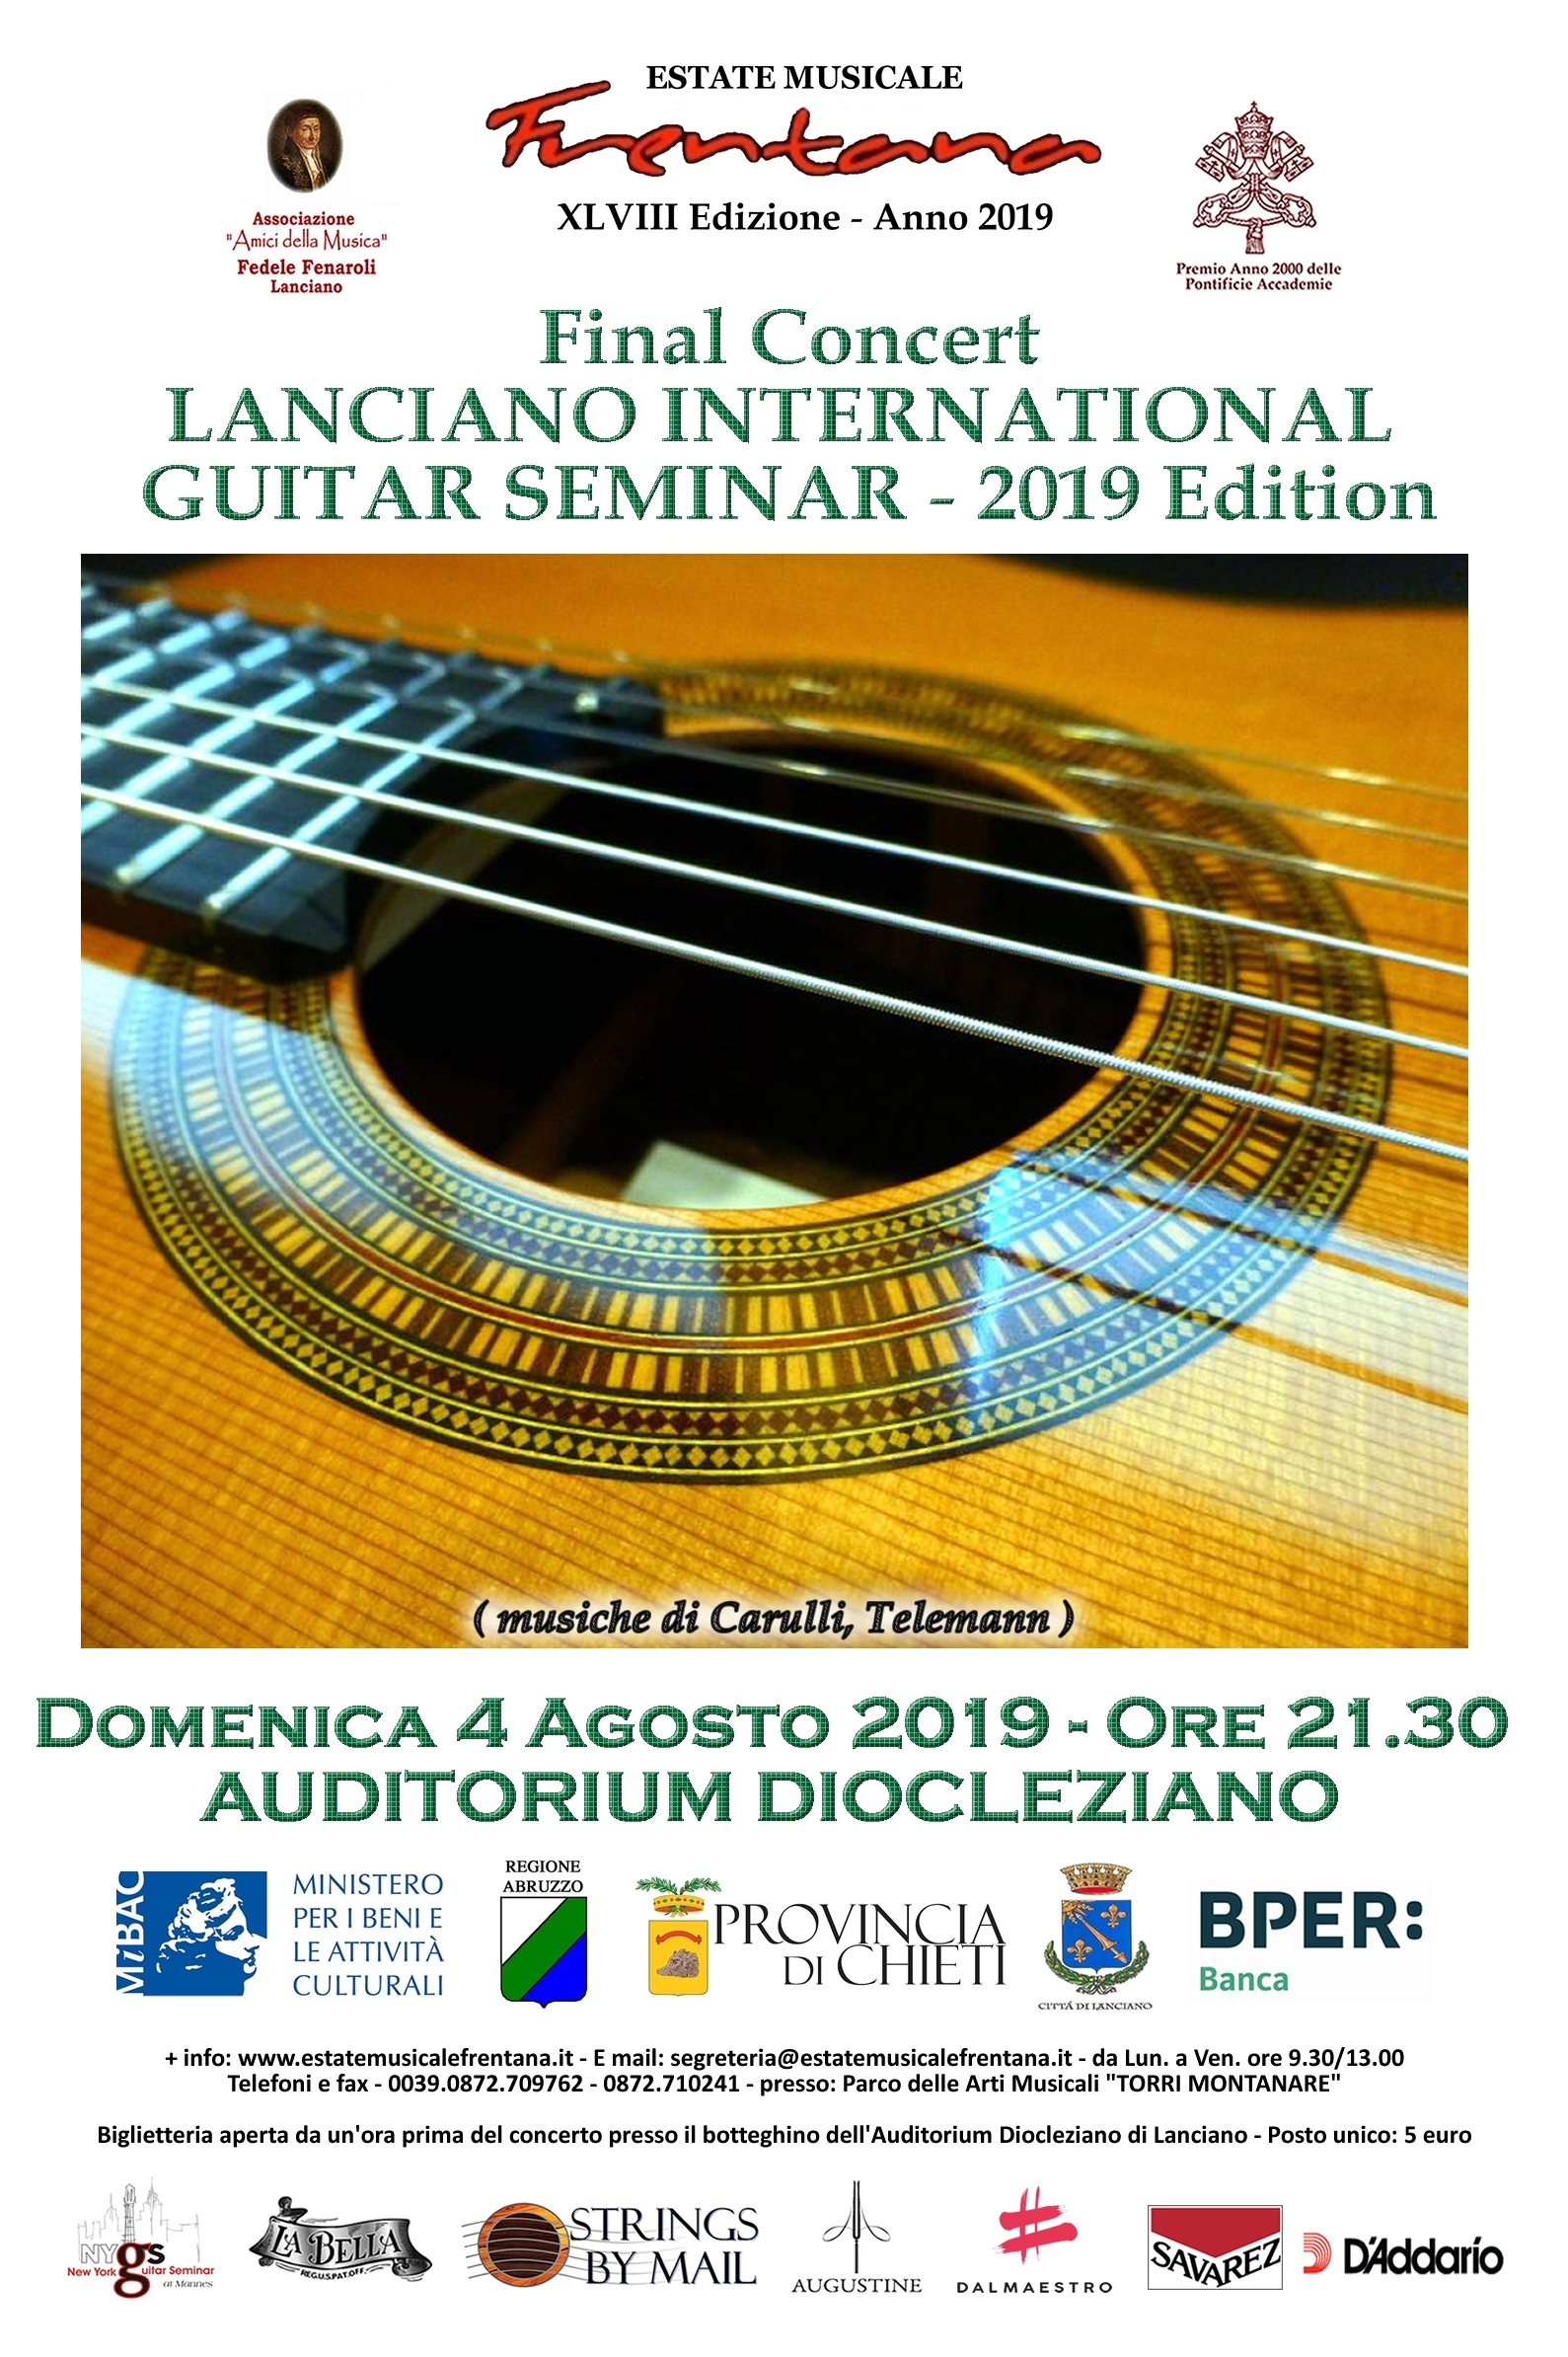 Final Concert LANCIANO INTERNATIONAL GUITAR SEMINAR - 2019 EDITION